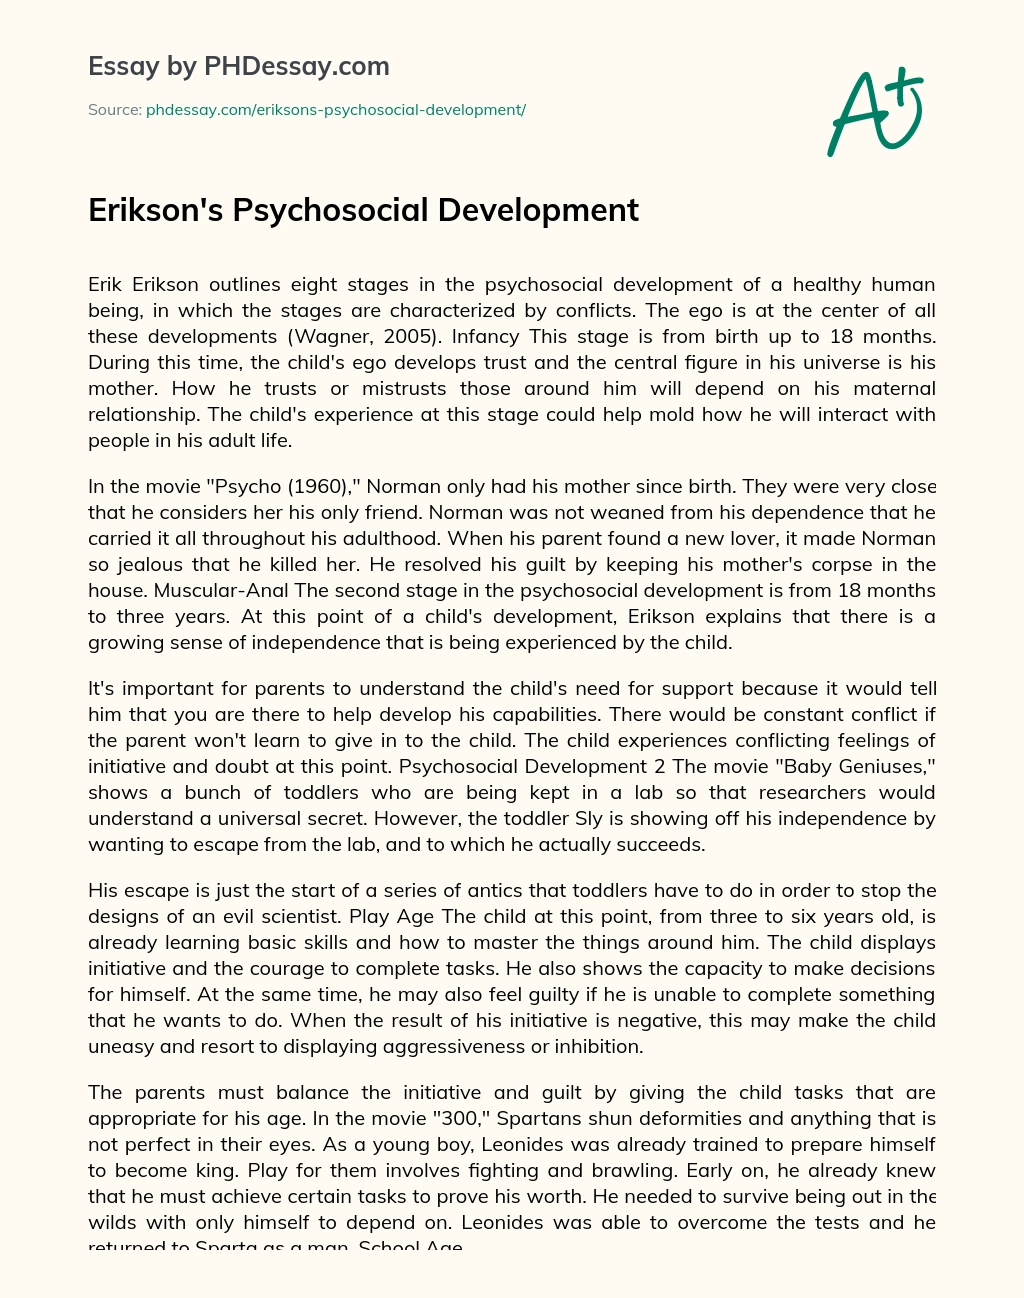 Erikson’s Psychosocial Development essay